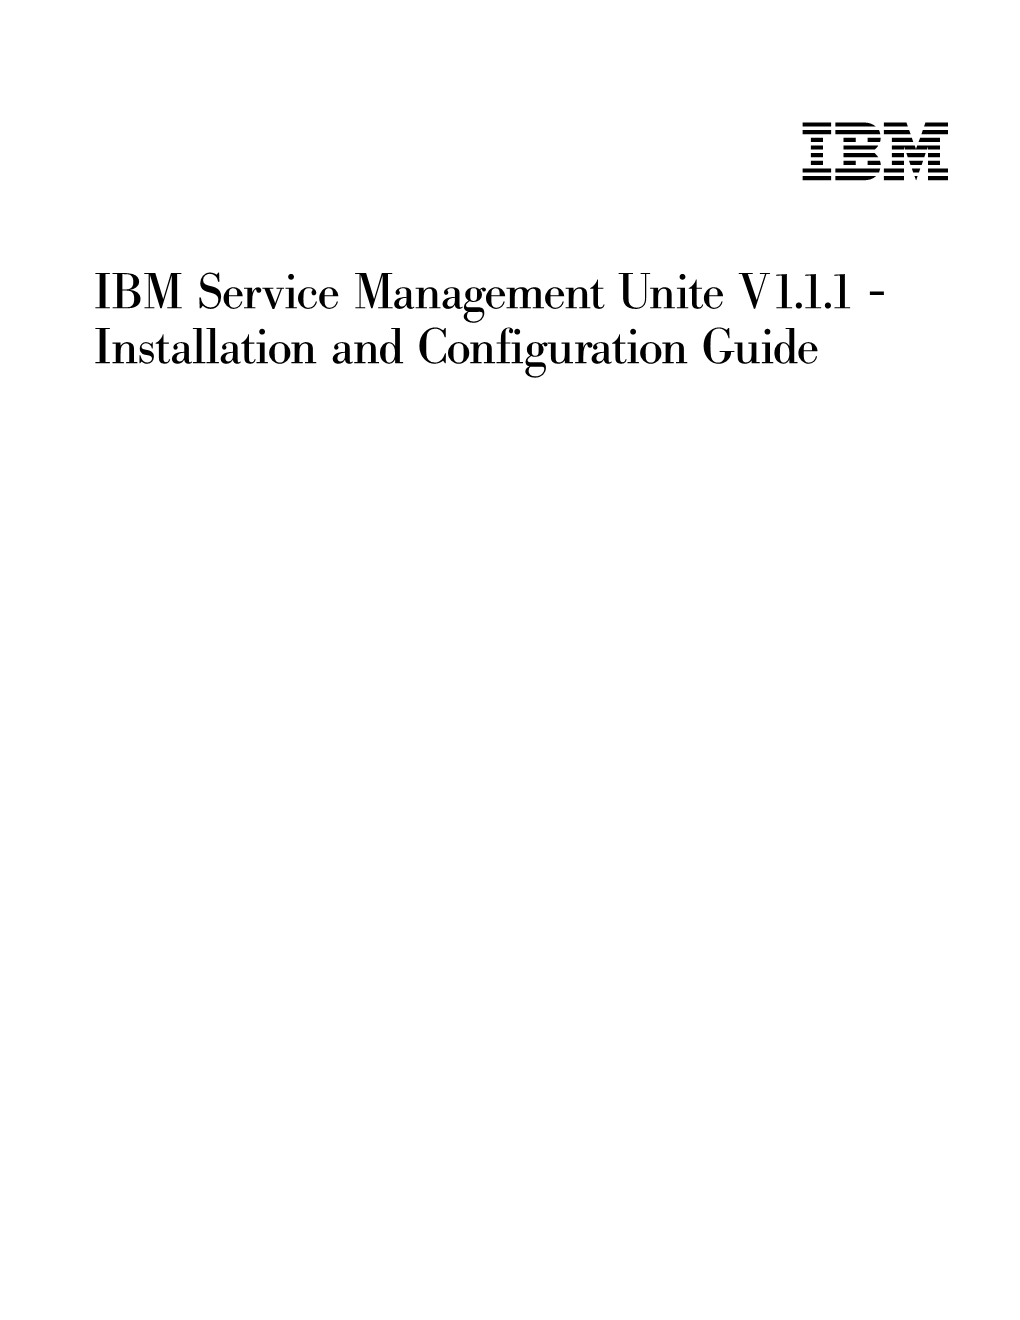 IBM Service Management Unite V1.1.1 - Installation and Configuration Guide Ii IBM Service Management Unite V1.1.1 - Installation and Configuration Guide Contents